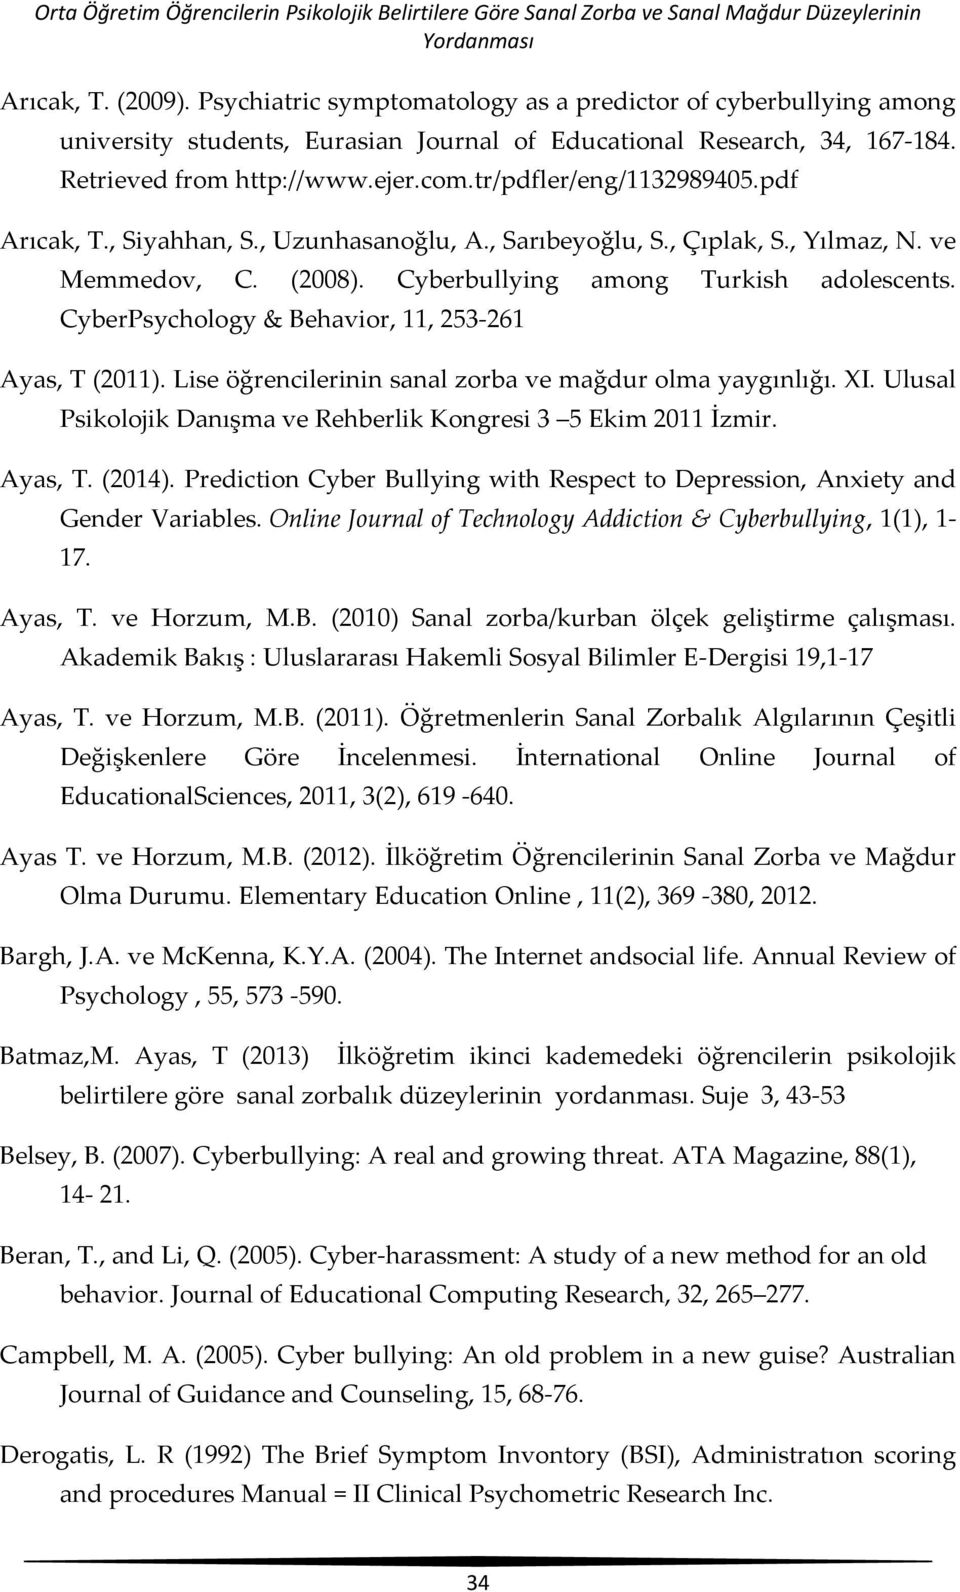 tr/pdfler/eng/1132989405.pdf Arıcak, T., Siyahhan, S., Uzunhasanoğlu, A., Sarıbeyoğlu, S., Çıplak, S., Yılmaz, N. ve Memmedov, C. (2008). Cyberbullying among Turkish adolescents.